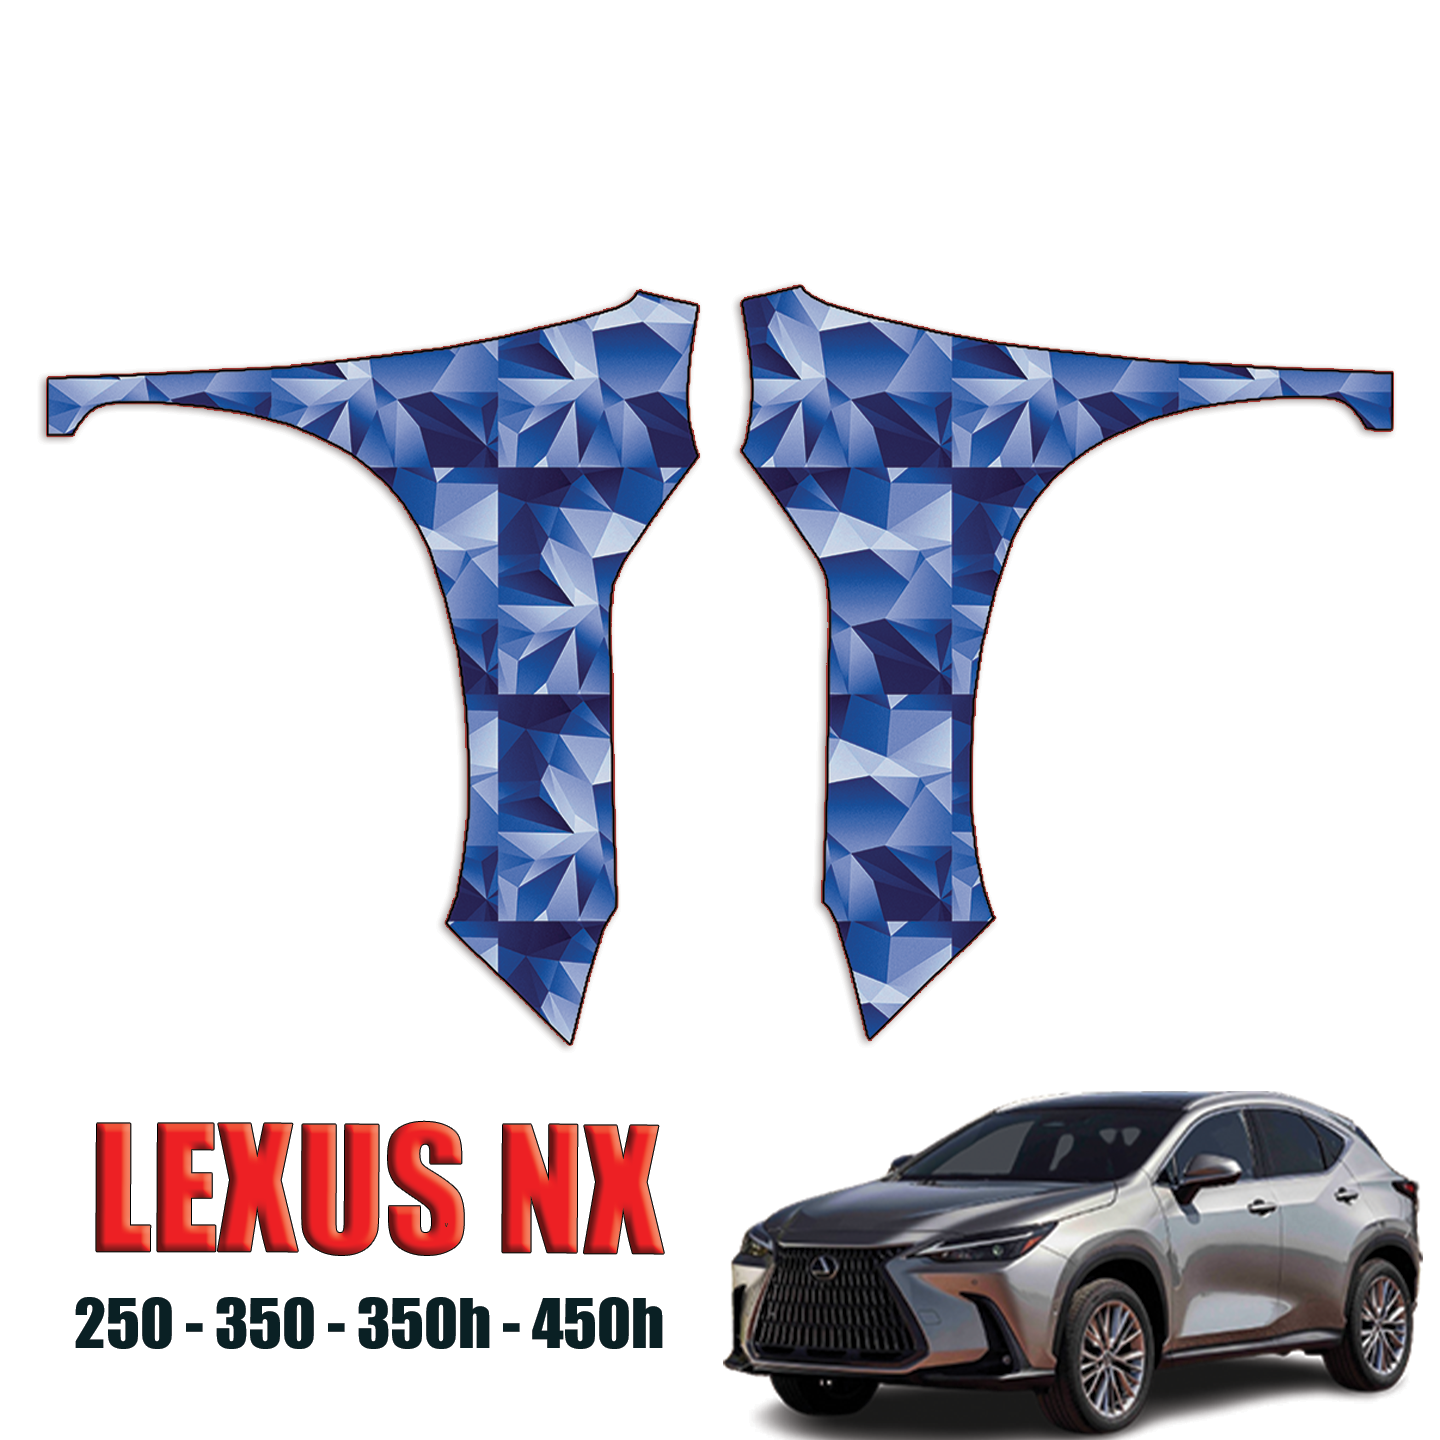 2022-2024 Lexus NX 250, 350, 350h, 450h Precut Paint Protection Kit – Full Front Fenders